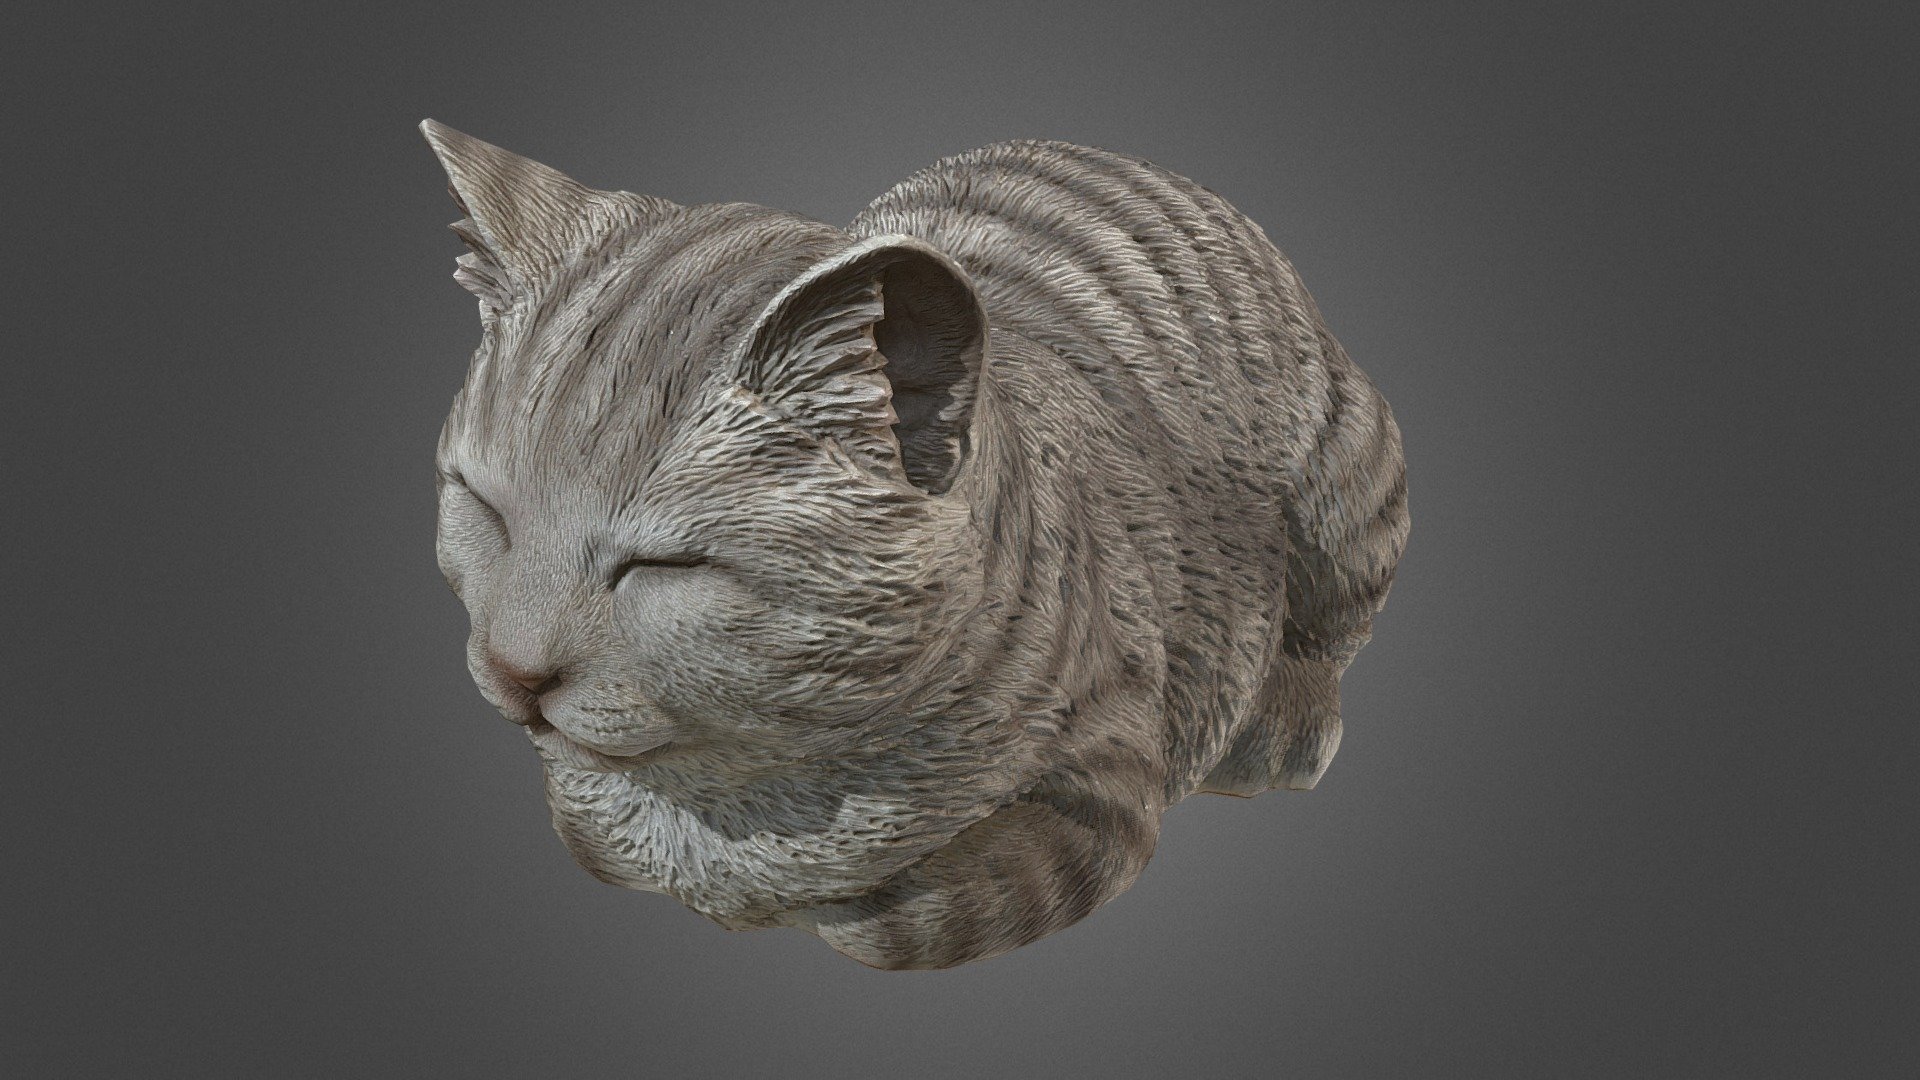 All details on Artstation:
https://www.artstation.com/artwork/dYl6w - Dozing Cat (Garden figurine) - 3D model by Vlad (@ssh4) 3d model